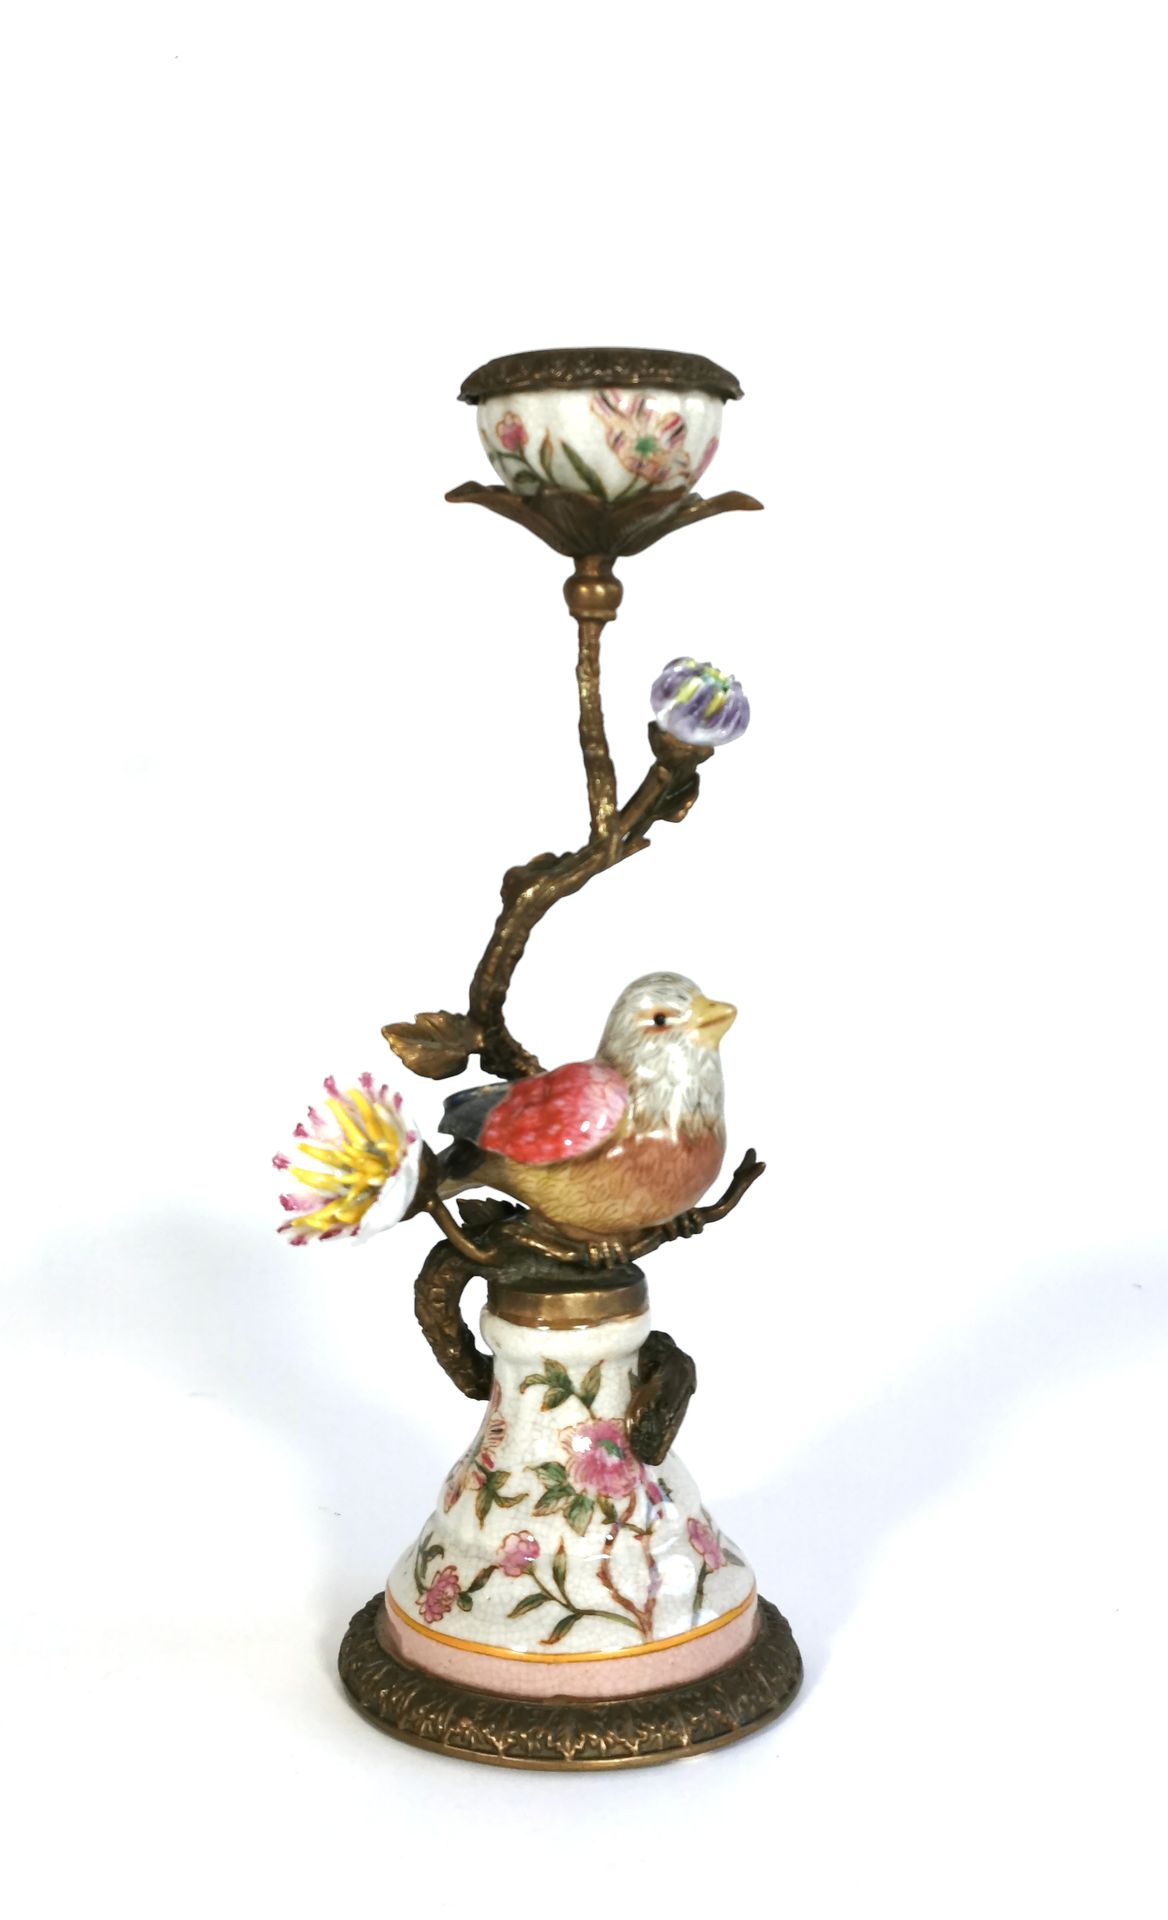 Null 多色瓷和鎏金铜烛台，烛台轴上有一只被鲜花簇拥的鸟。

标有 "G C "的丹麦作品

H.28厘米